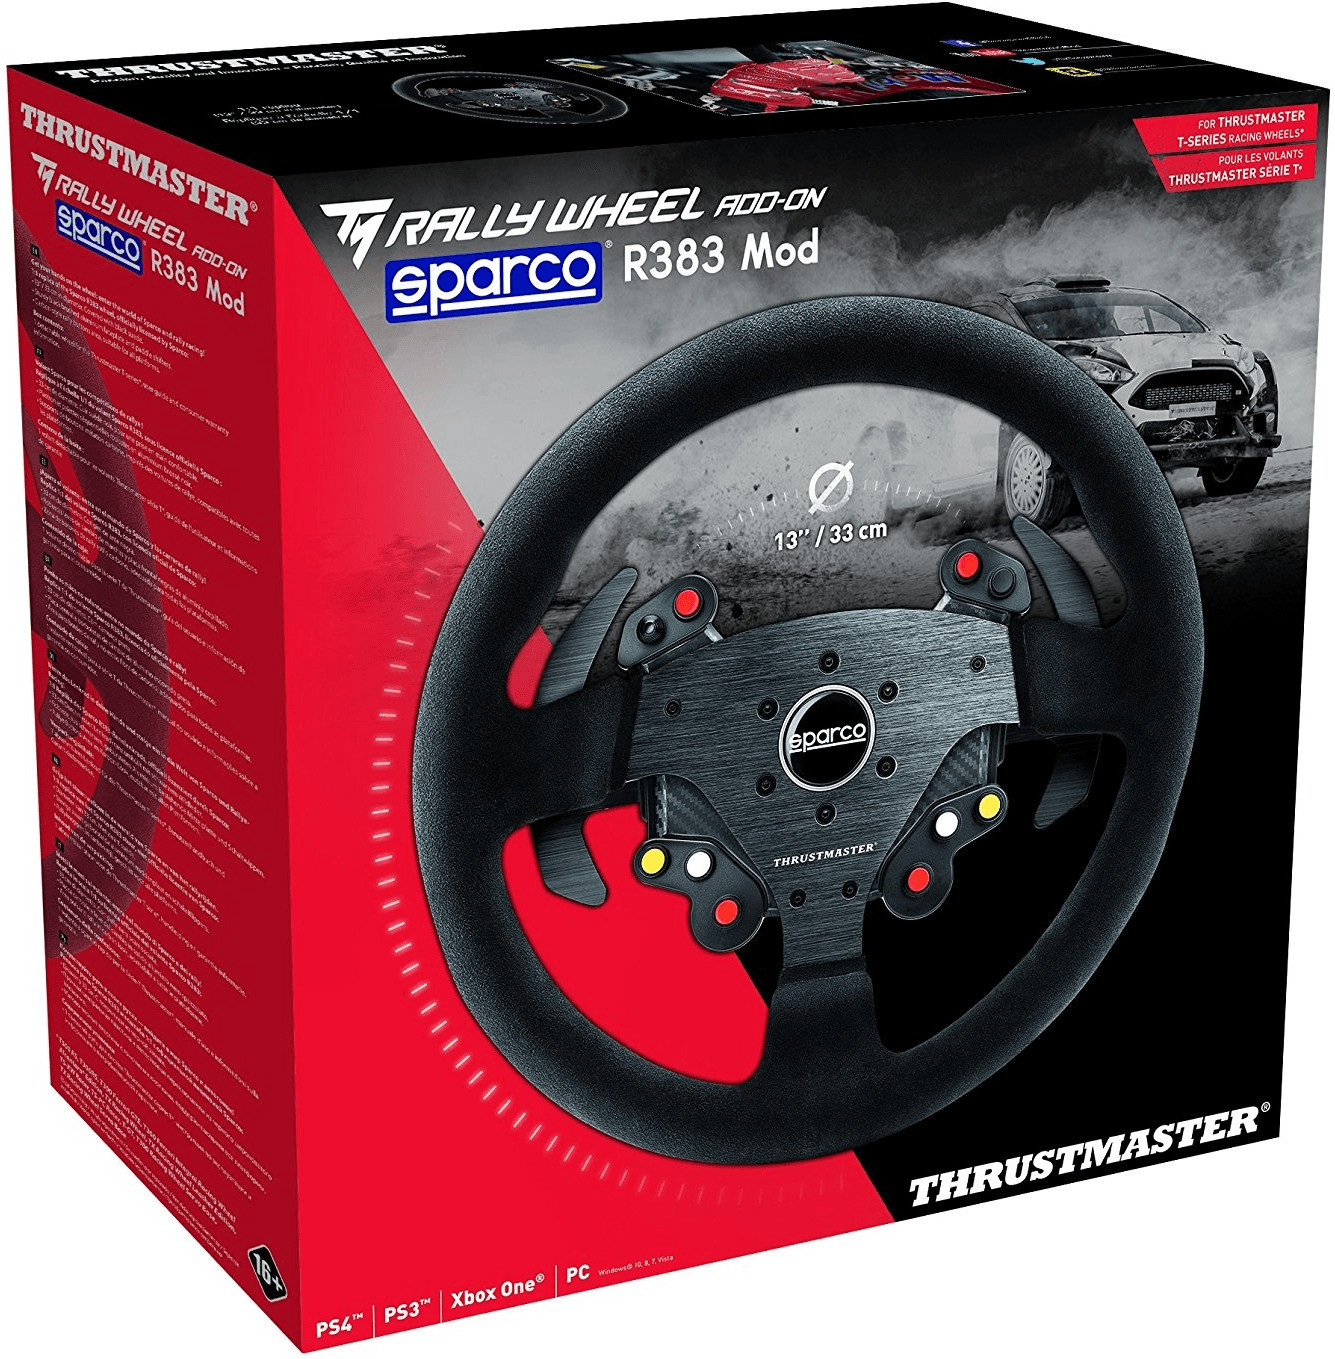 Thrustmaster Rally Wheel Add-On Sparco R383 Mod ab 229,99